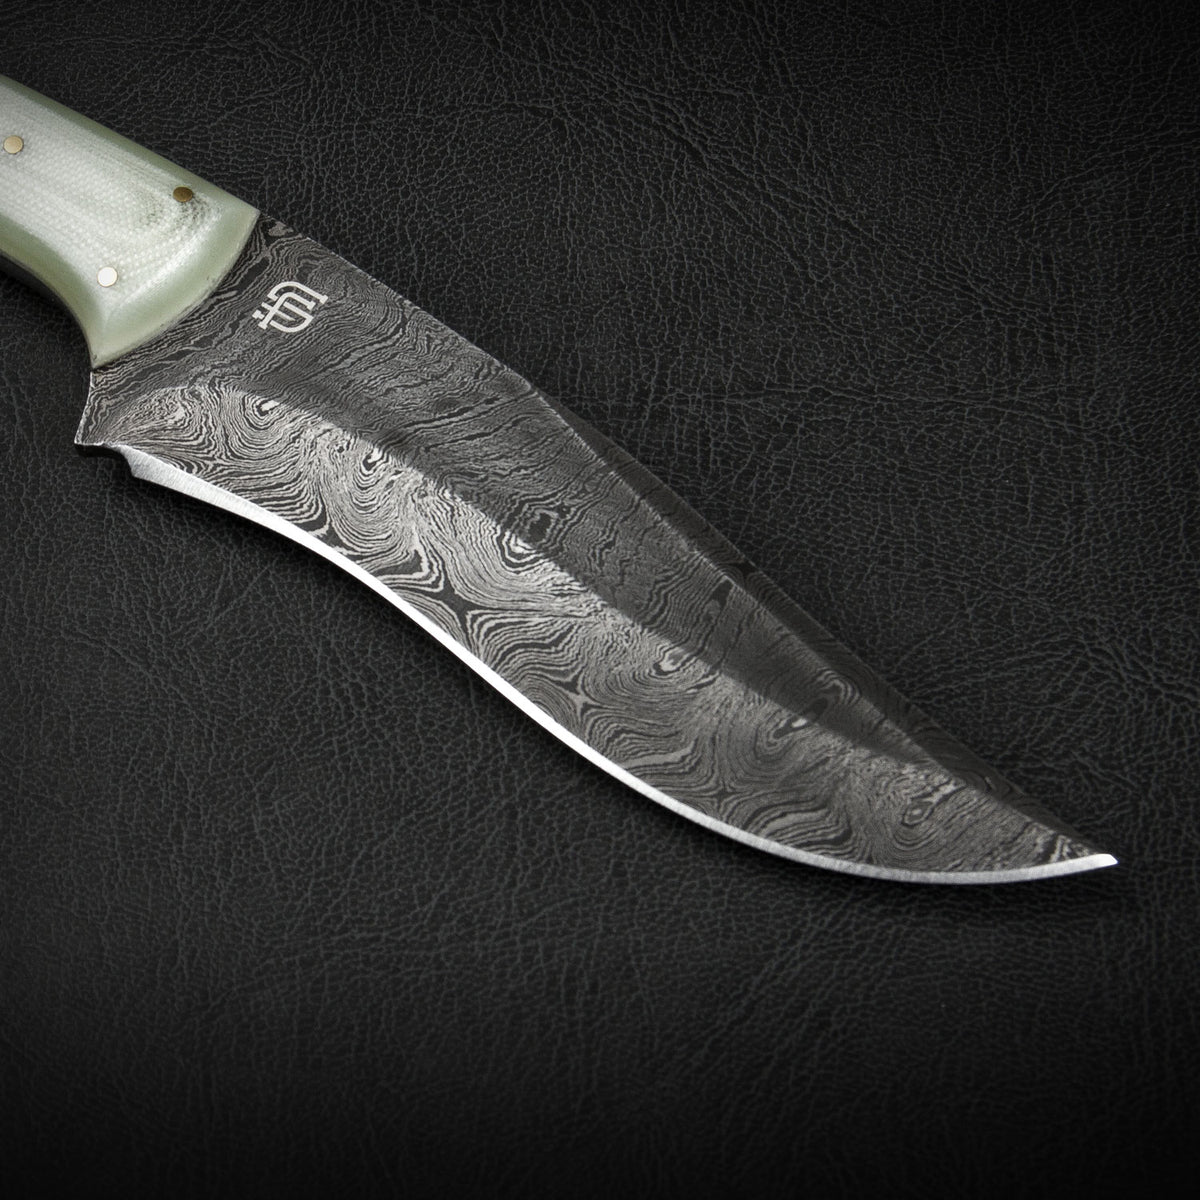 Bmk-163 Slatra Damascus Gut hook Knife Damascus Fixed Blade